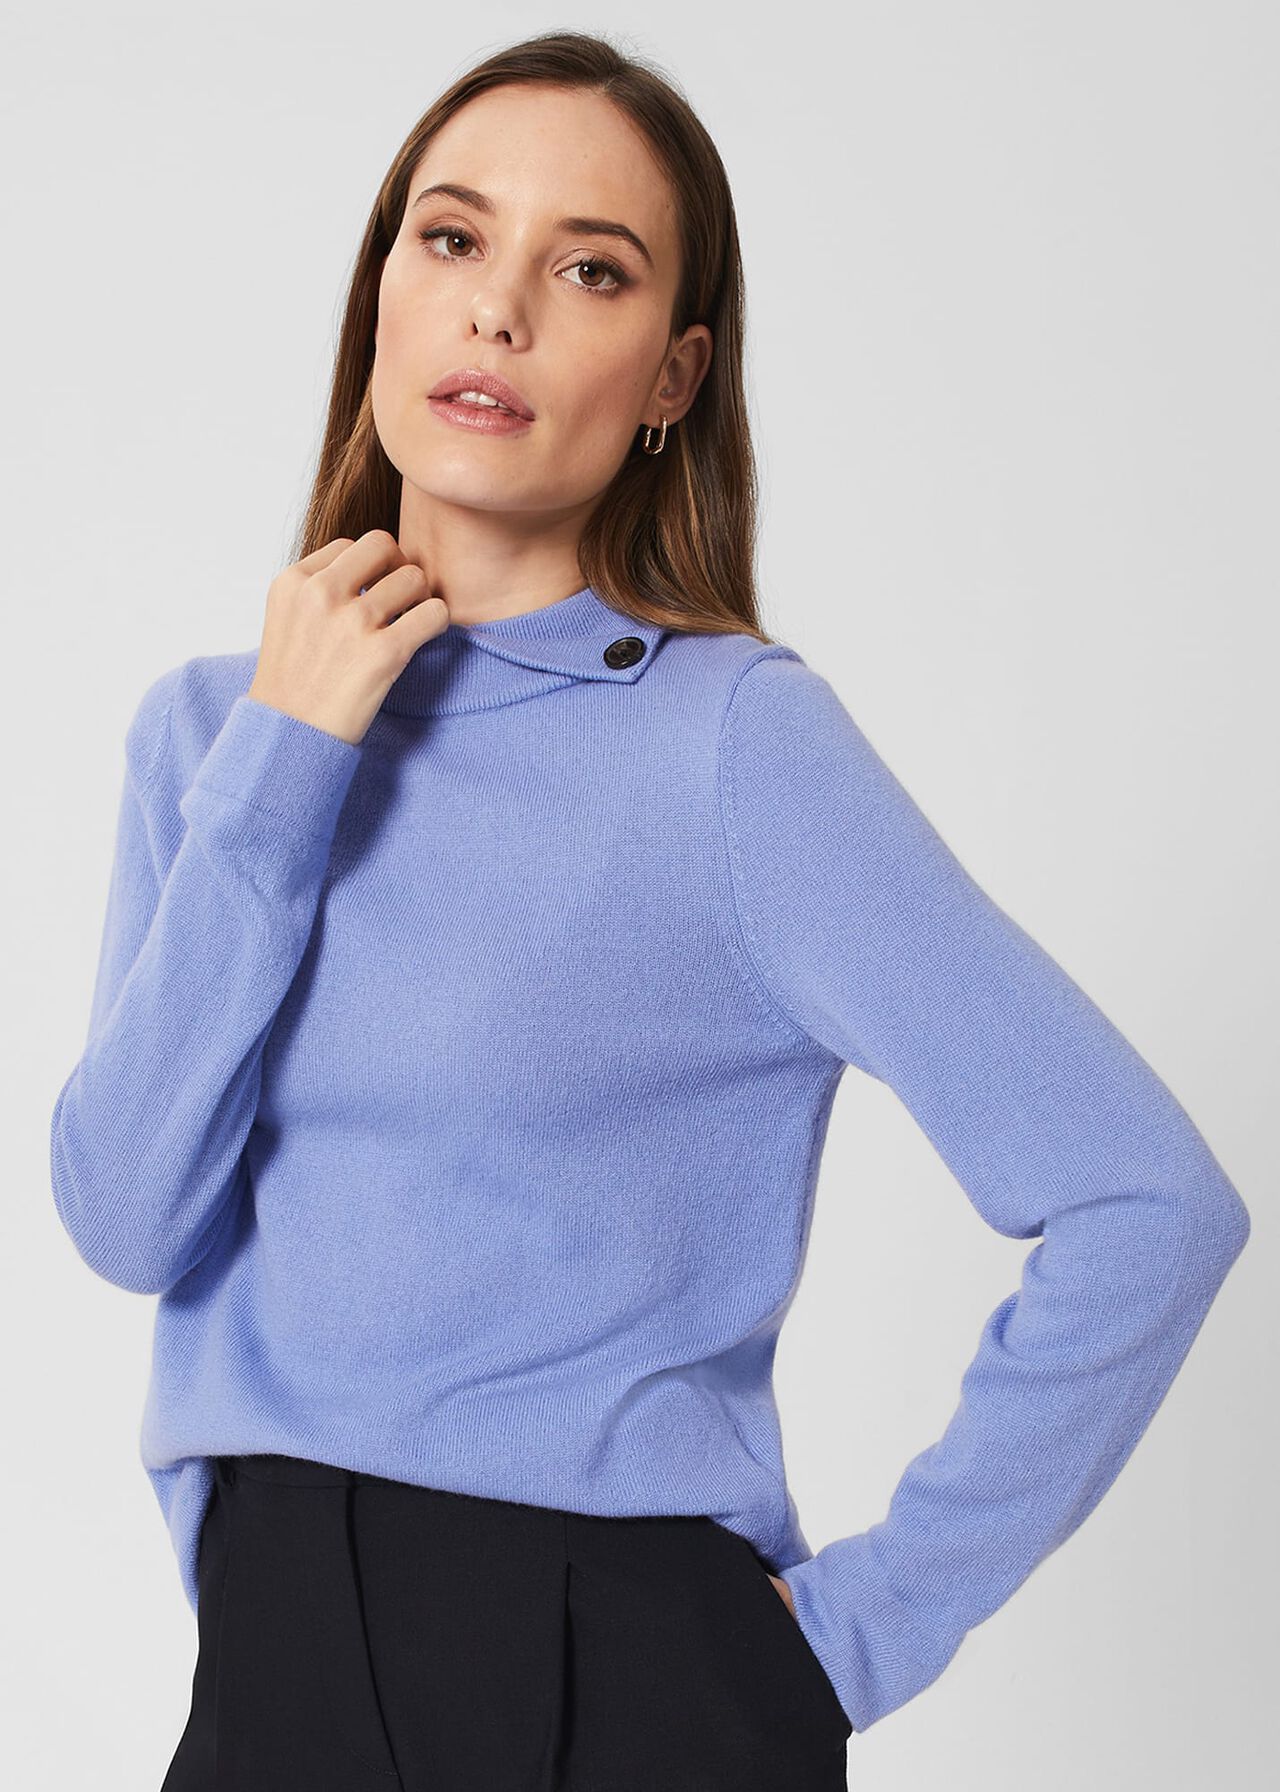 Talia Wool Cashmere Sweater, Deep Sky Blue, hi-res